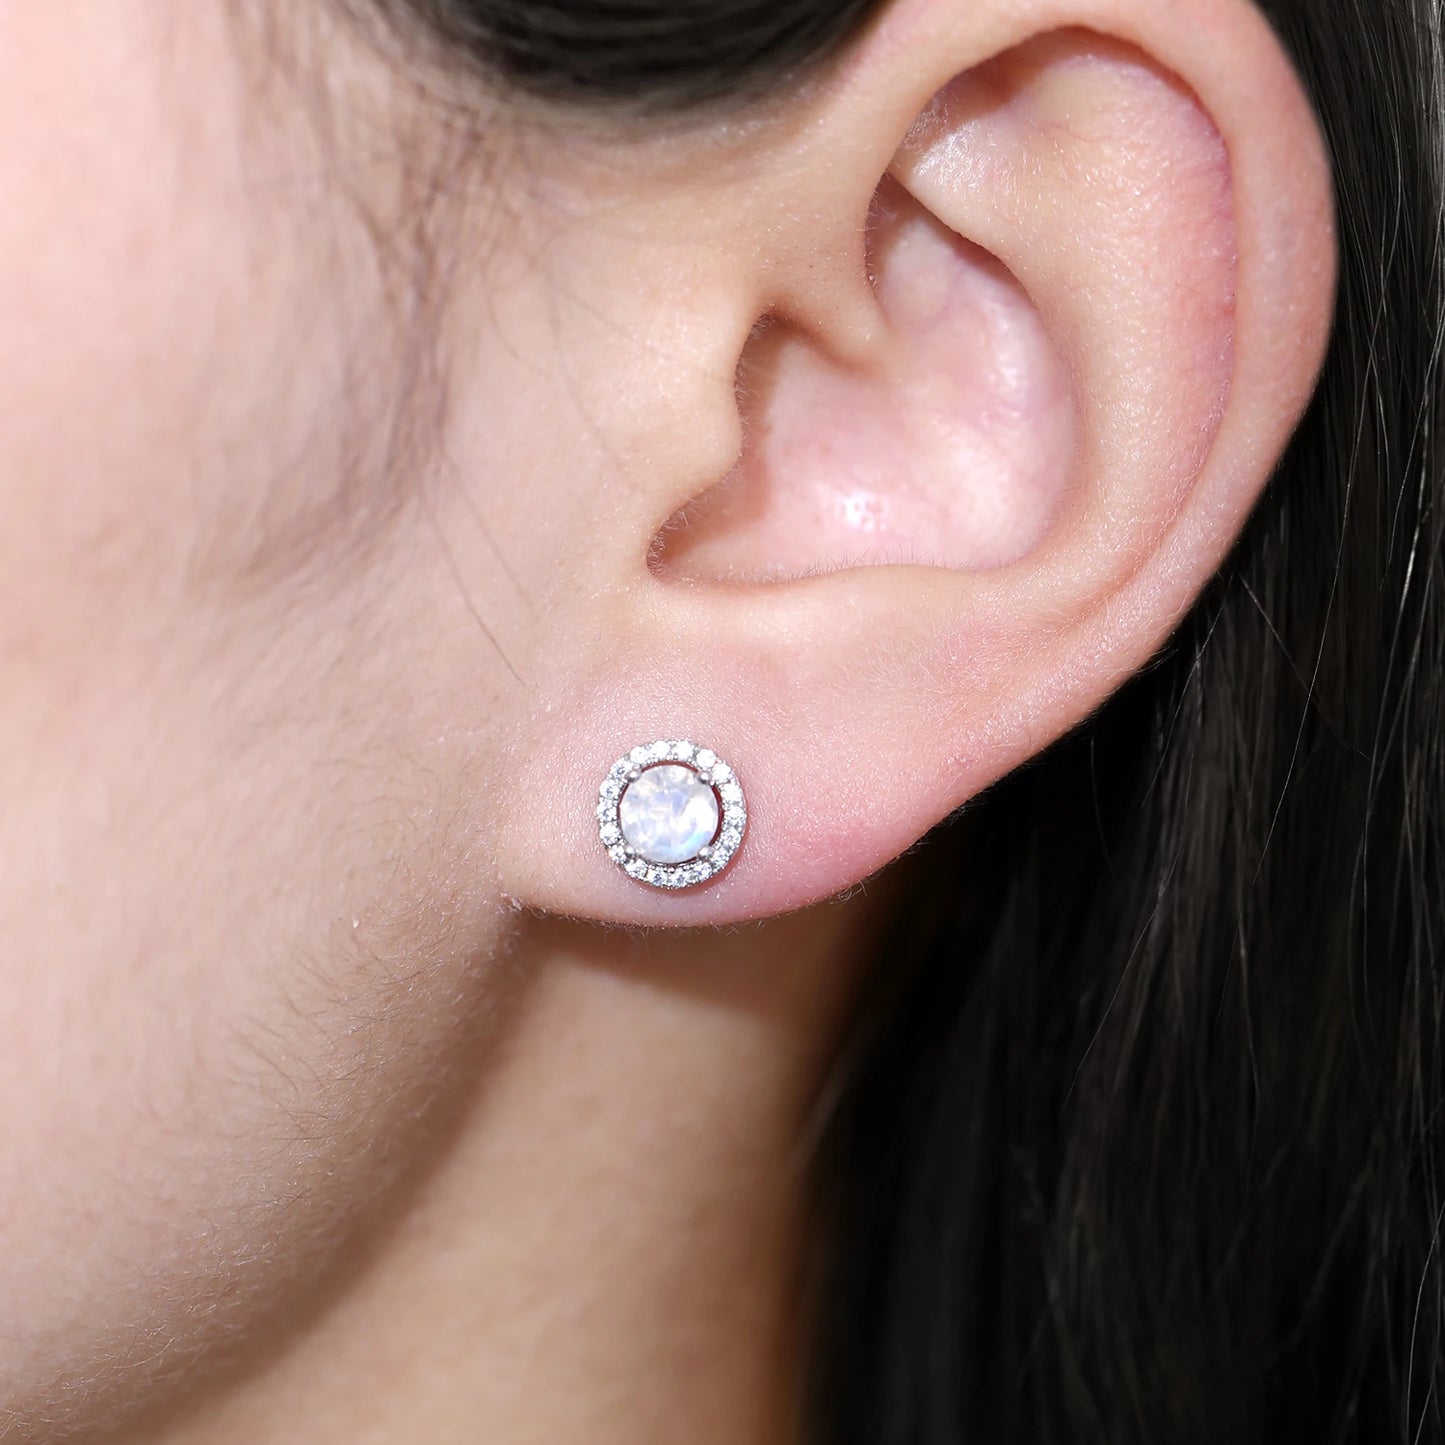 GEM'S BALLET Minimalist Earrings 5mm Milky Blue Moonstone Studs Earrings in 925 Sterling Silver June Birthstone Gift For Her